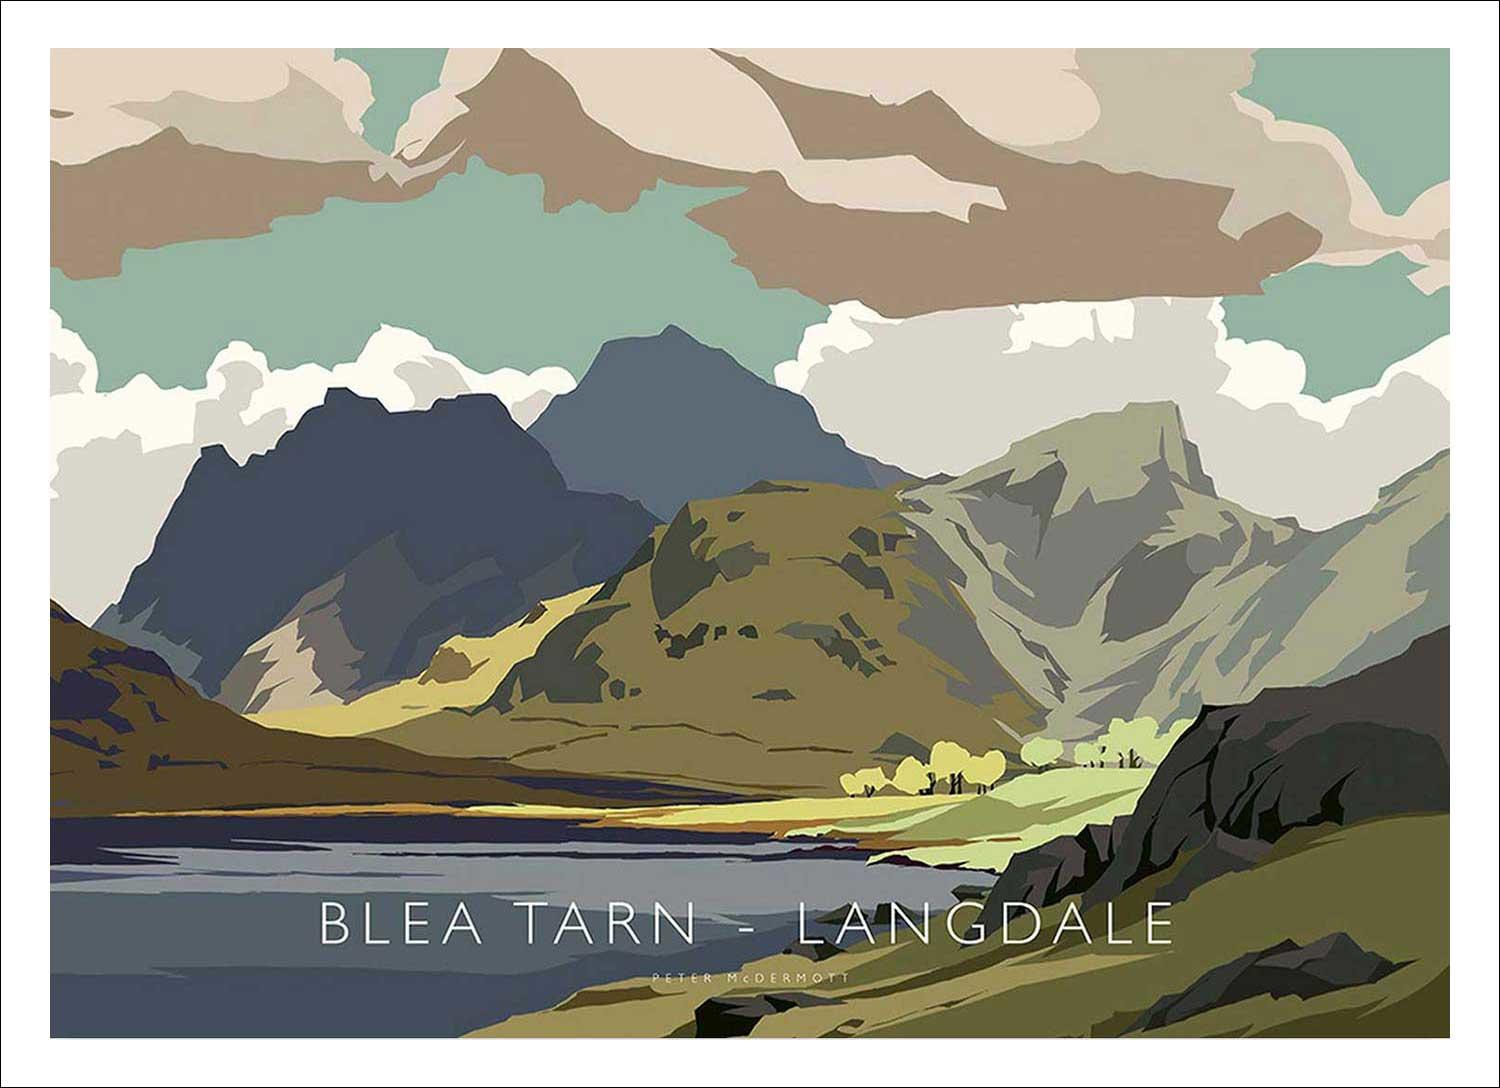 Blea Tarn, Langdale Art Print from an original illustration by artist Peter McDermott